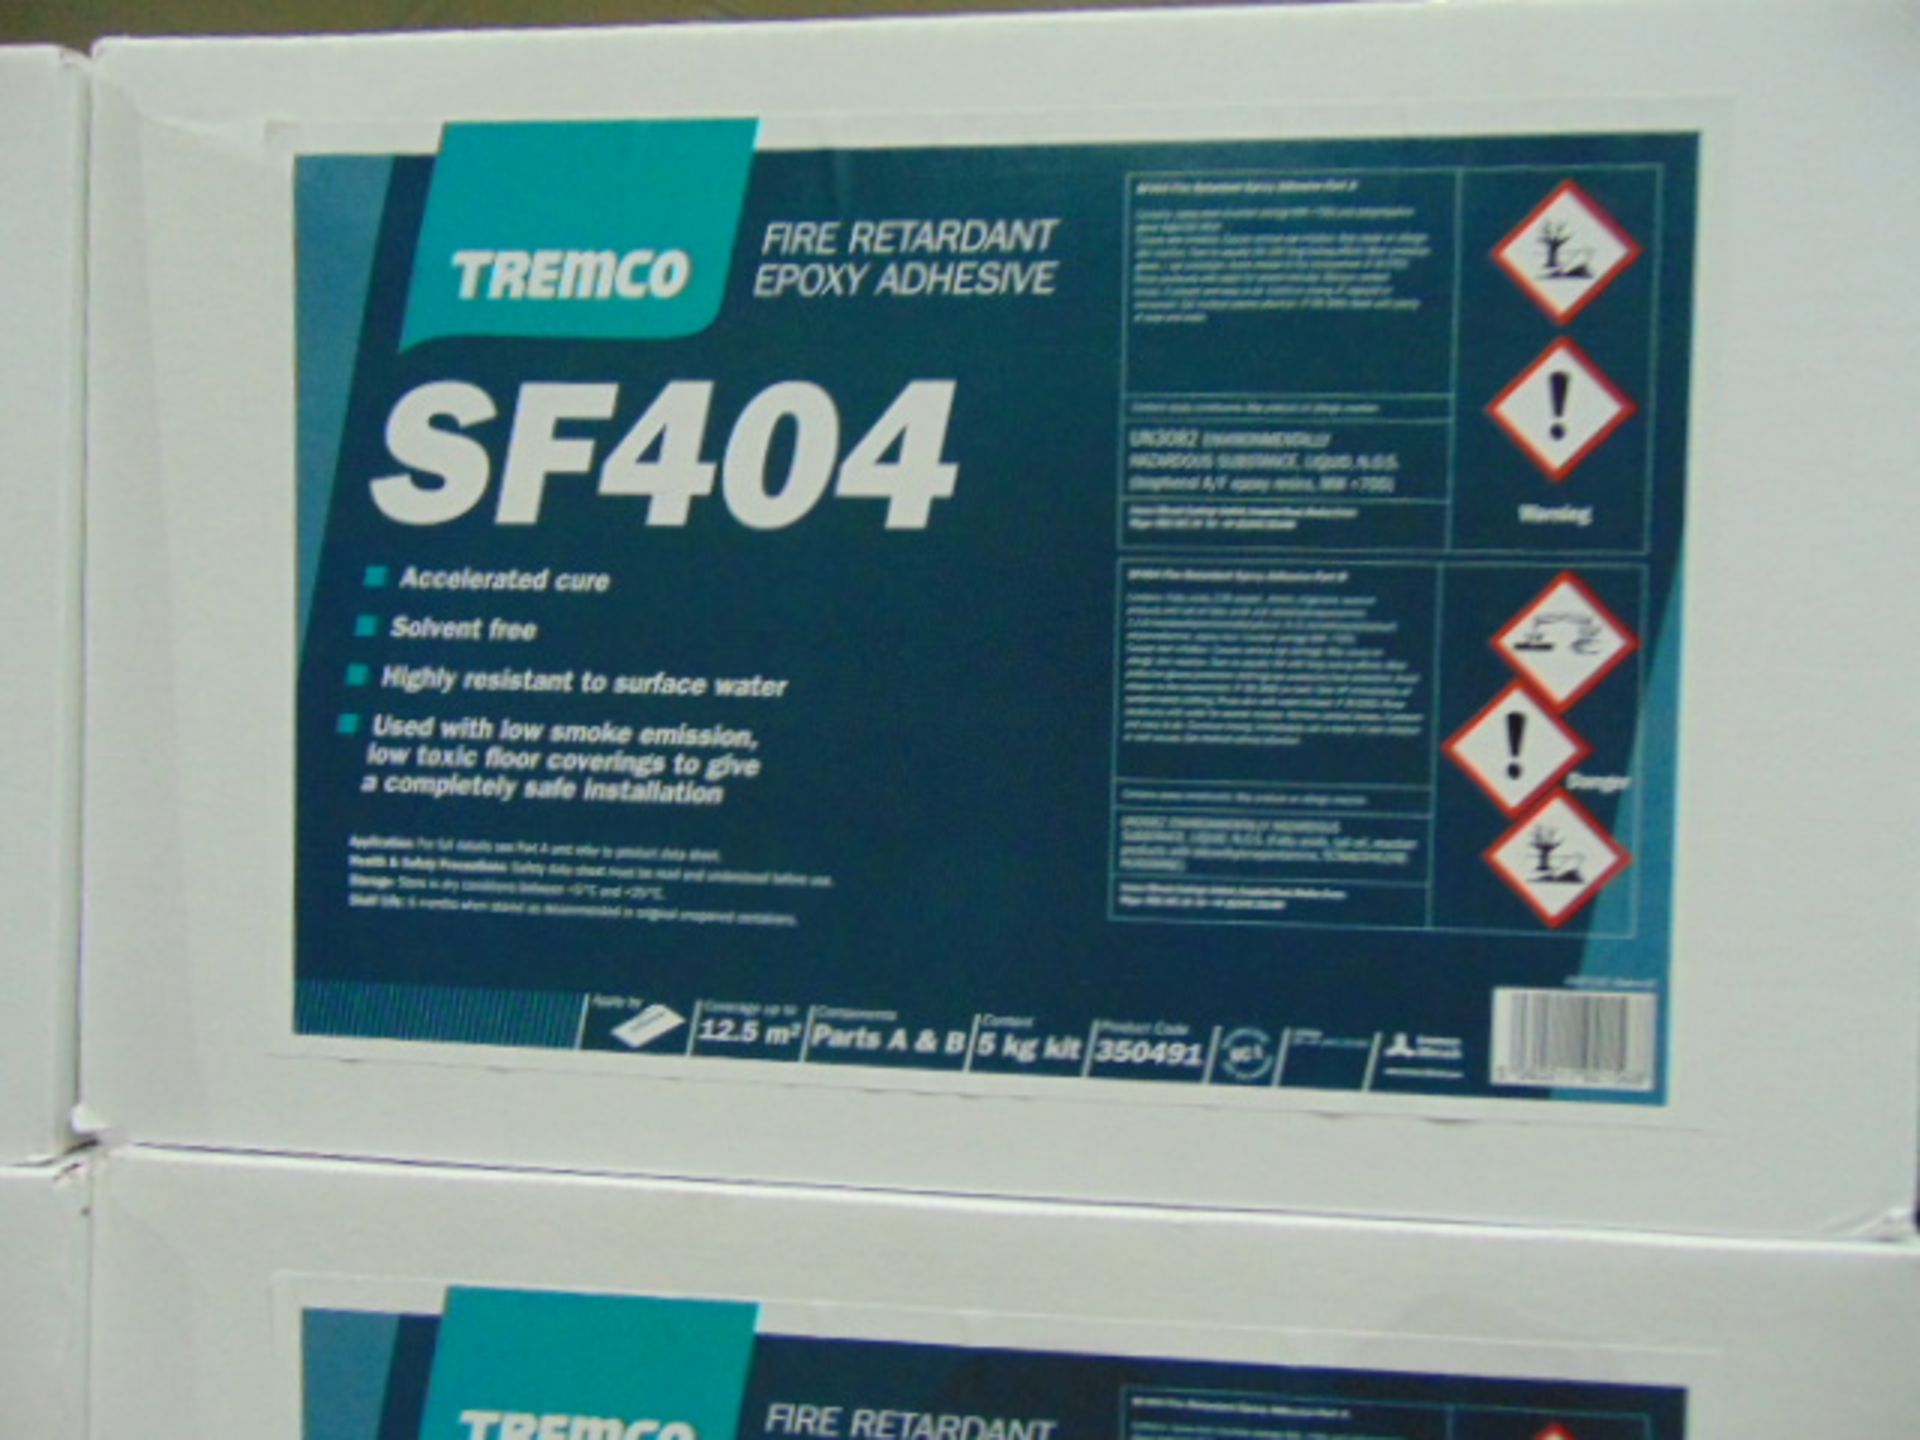 29 x Boxes of Tremco SF404 Fire Retardant Epoxy - Image 2 of 5